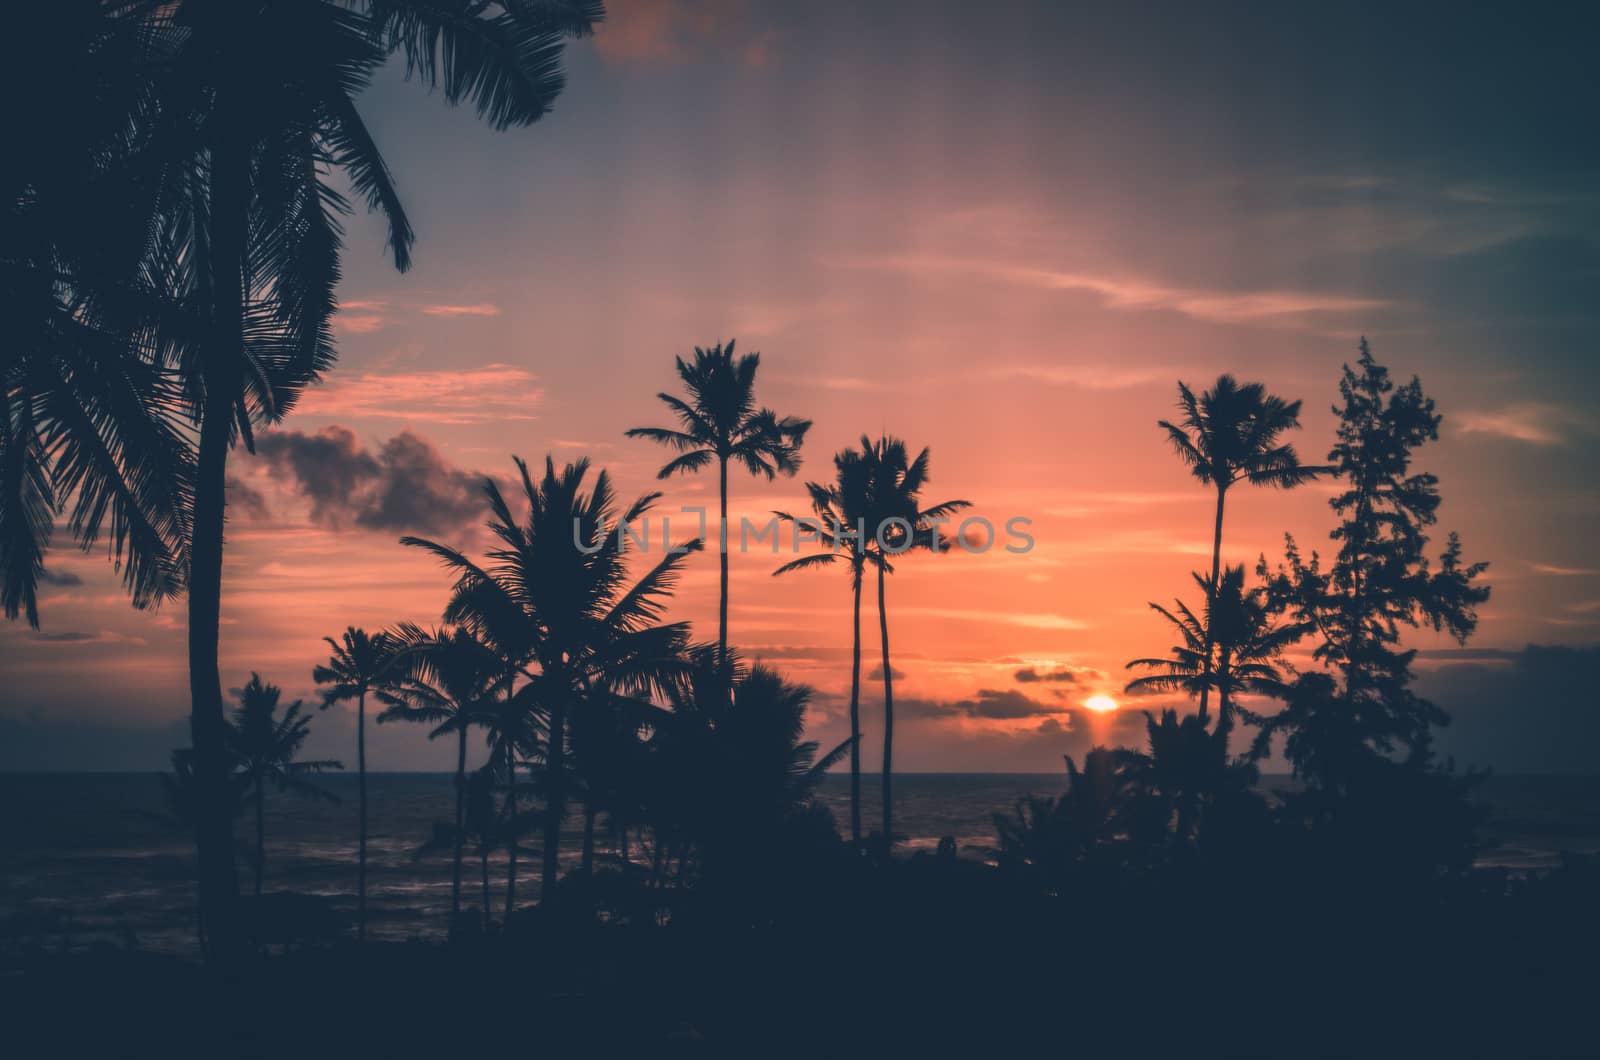 Palm trees enjoying the spectacular sunset in Jauai, US by mikelju